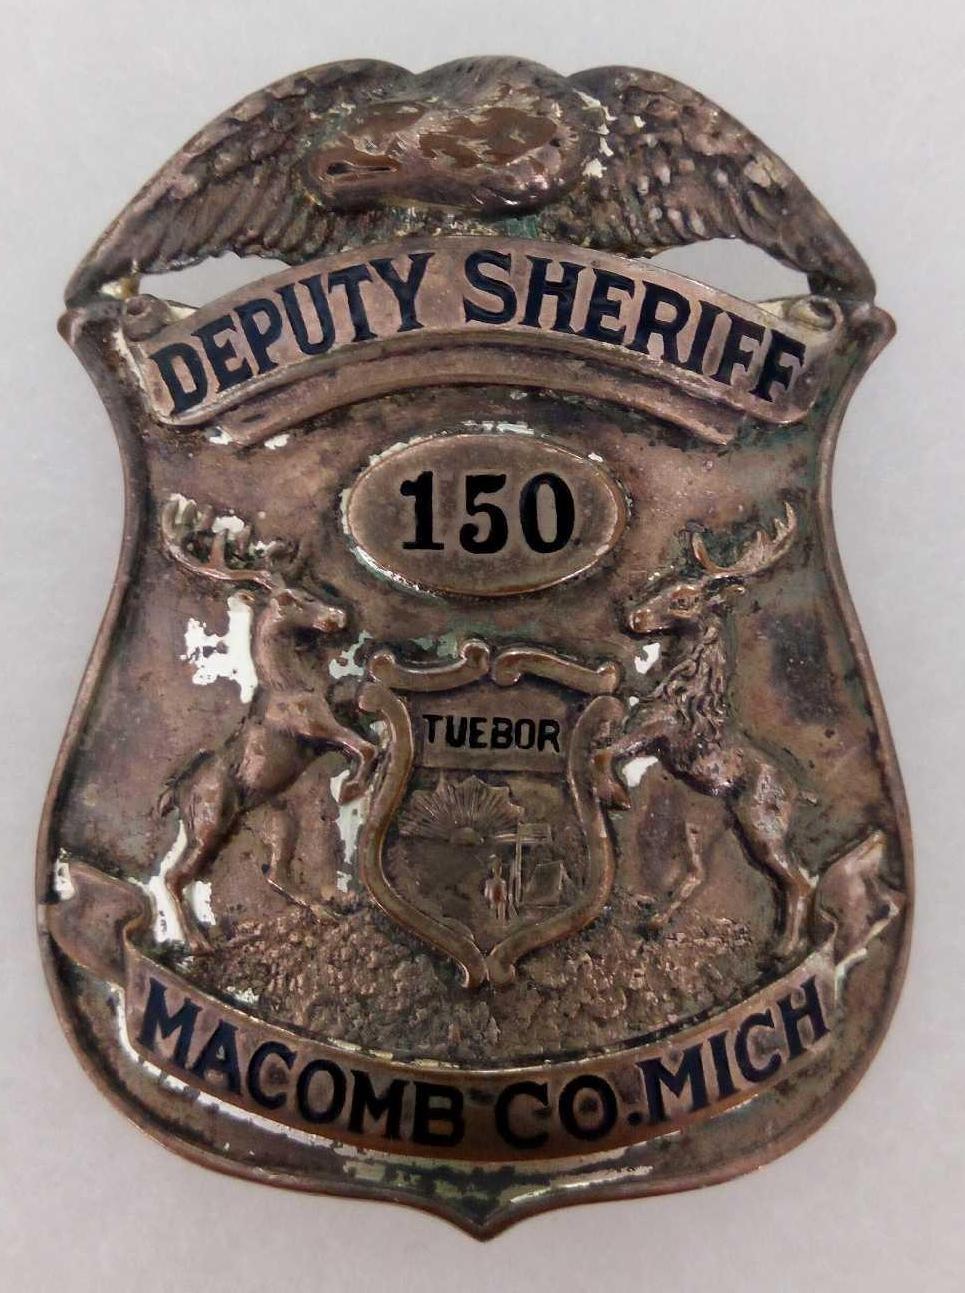 VINTAGE DEPUTY SHERIFF 150 TUEBOR MACOMB CO MICHIGAN, HALLMARK "DETROIT" BADGE